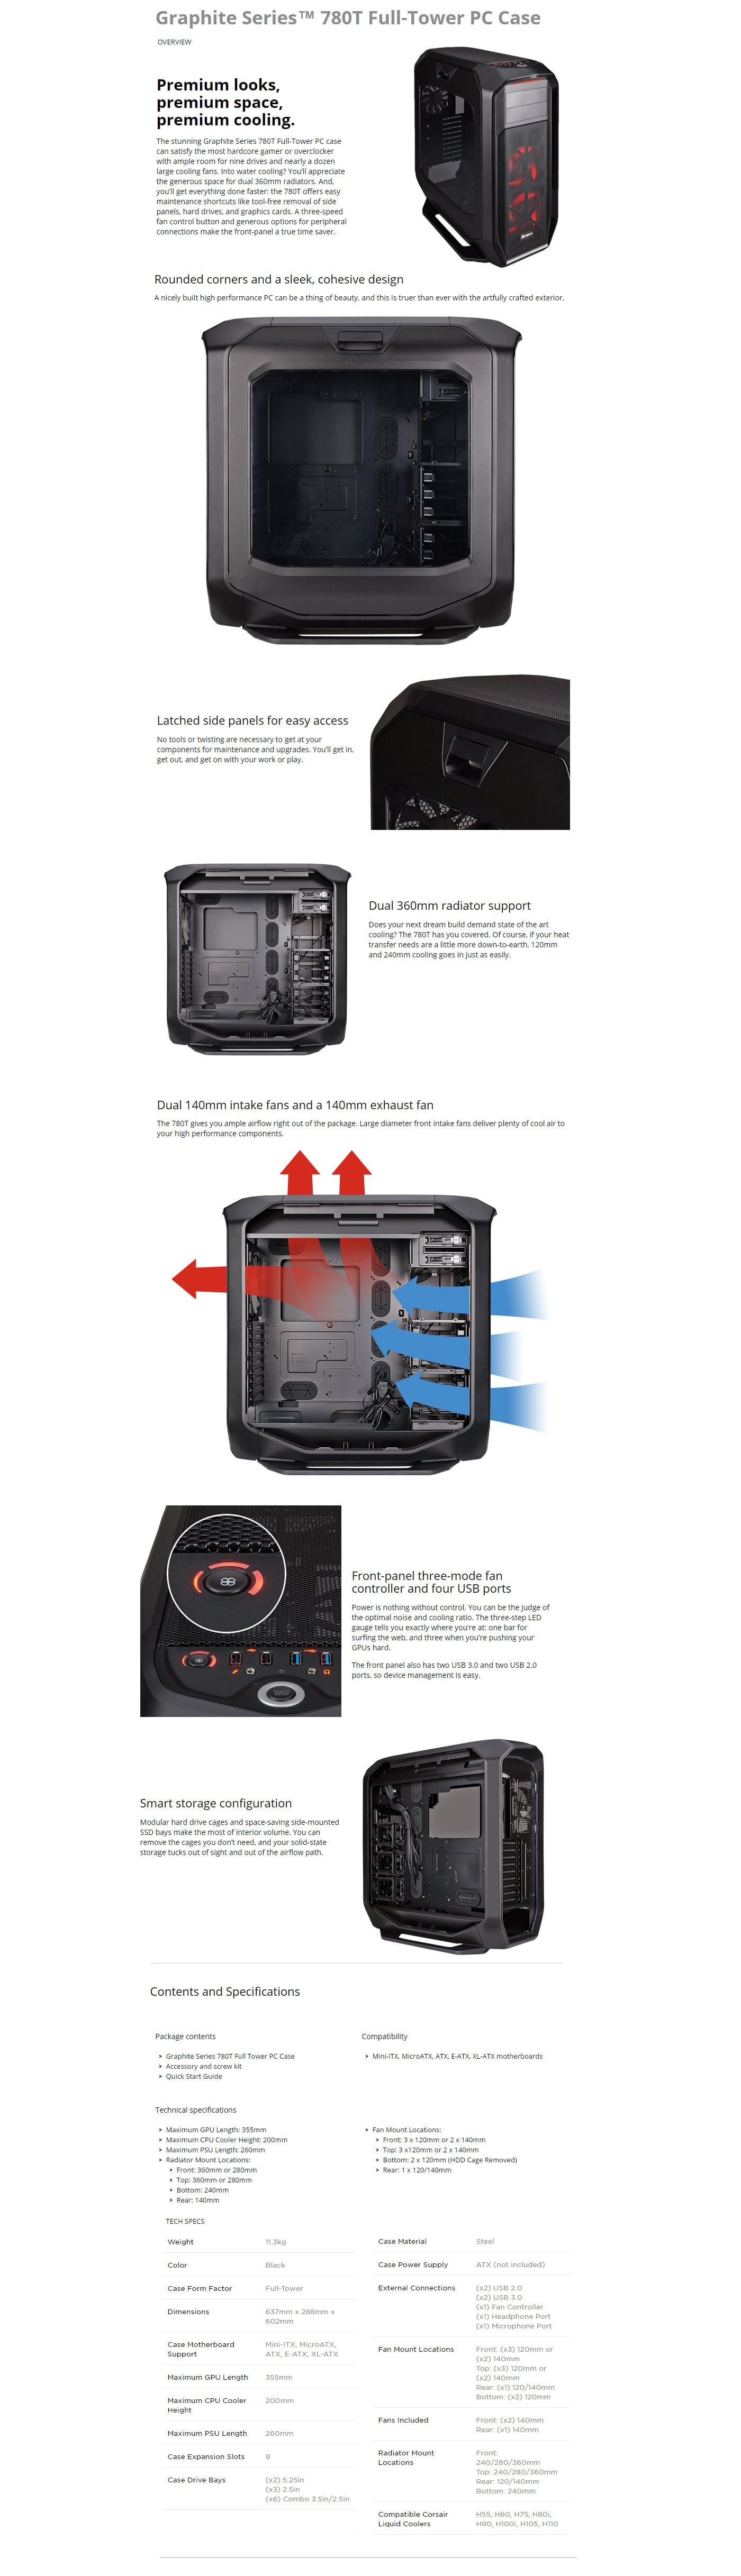 Corsair Graphite Series 780T Black Full-Tower PC Case features